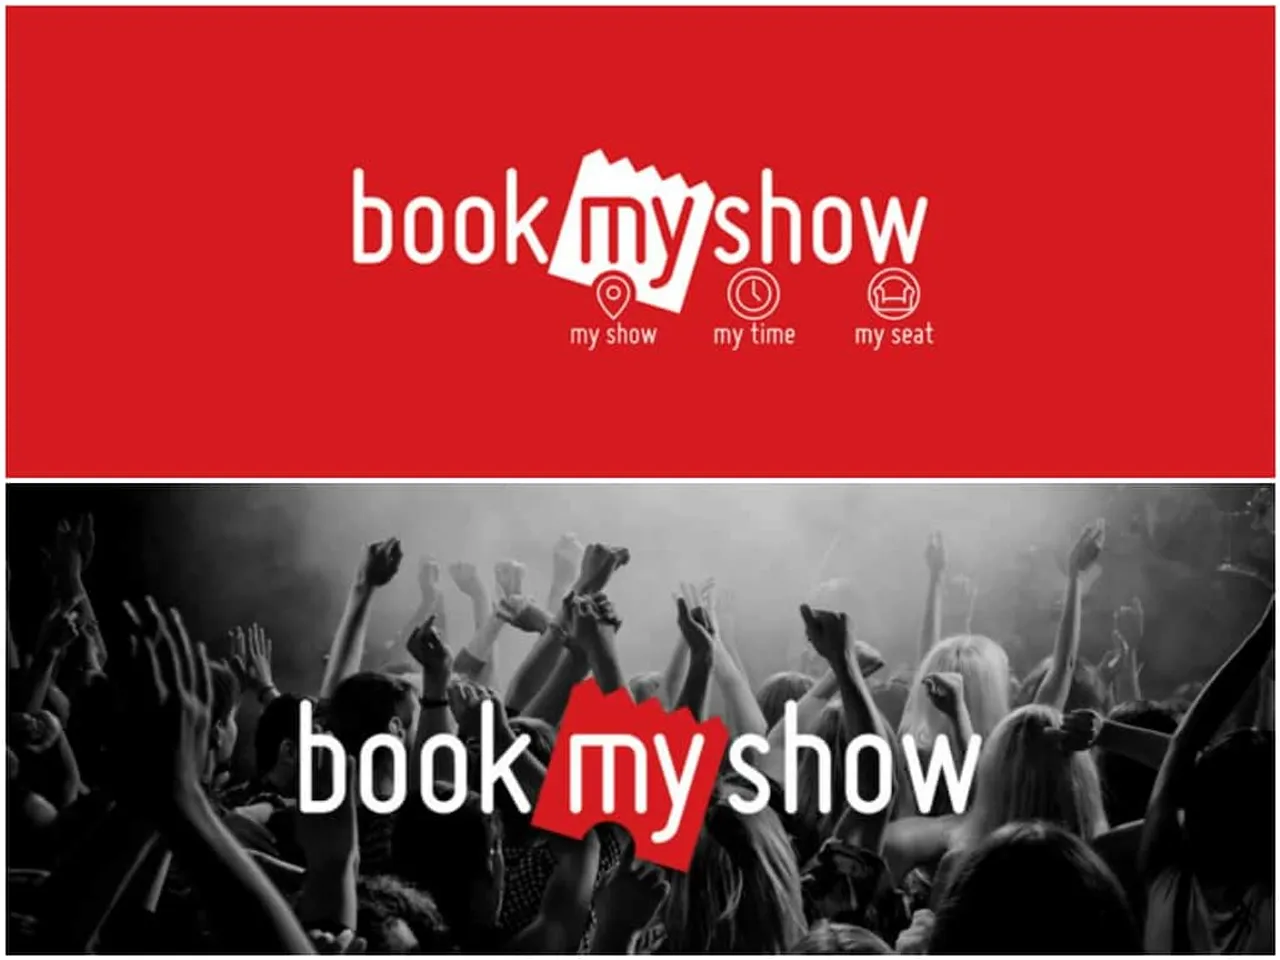 BookMyShow acquires Mumbai based Burrp